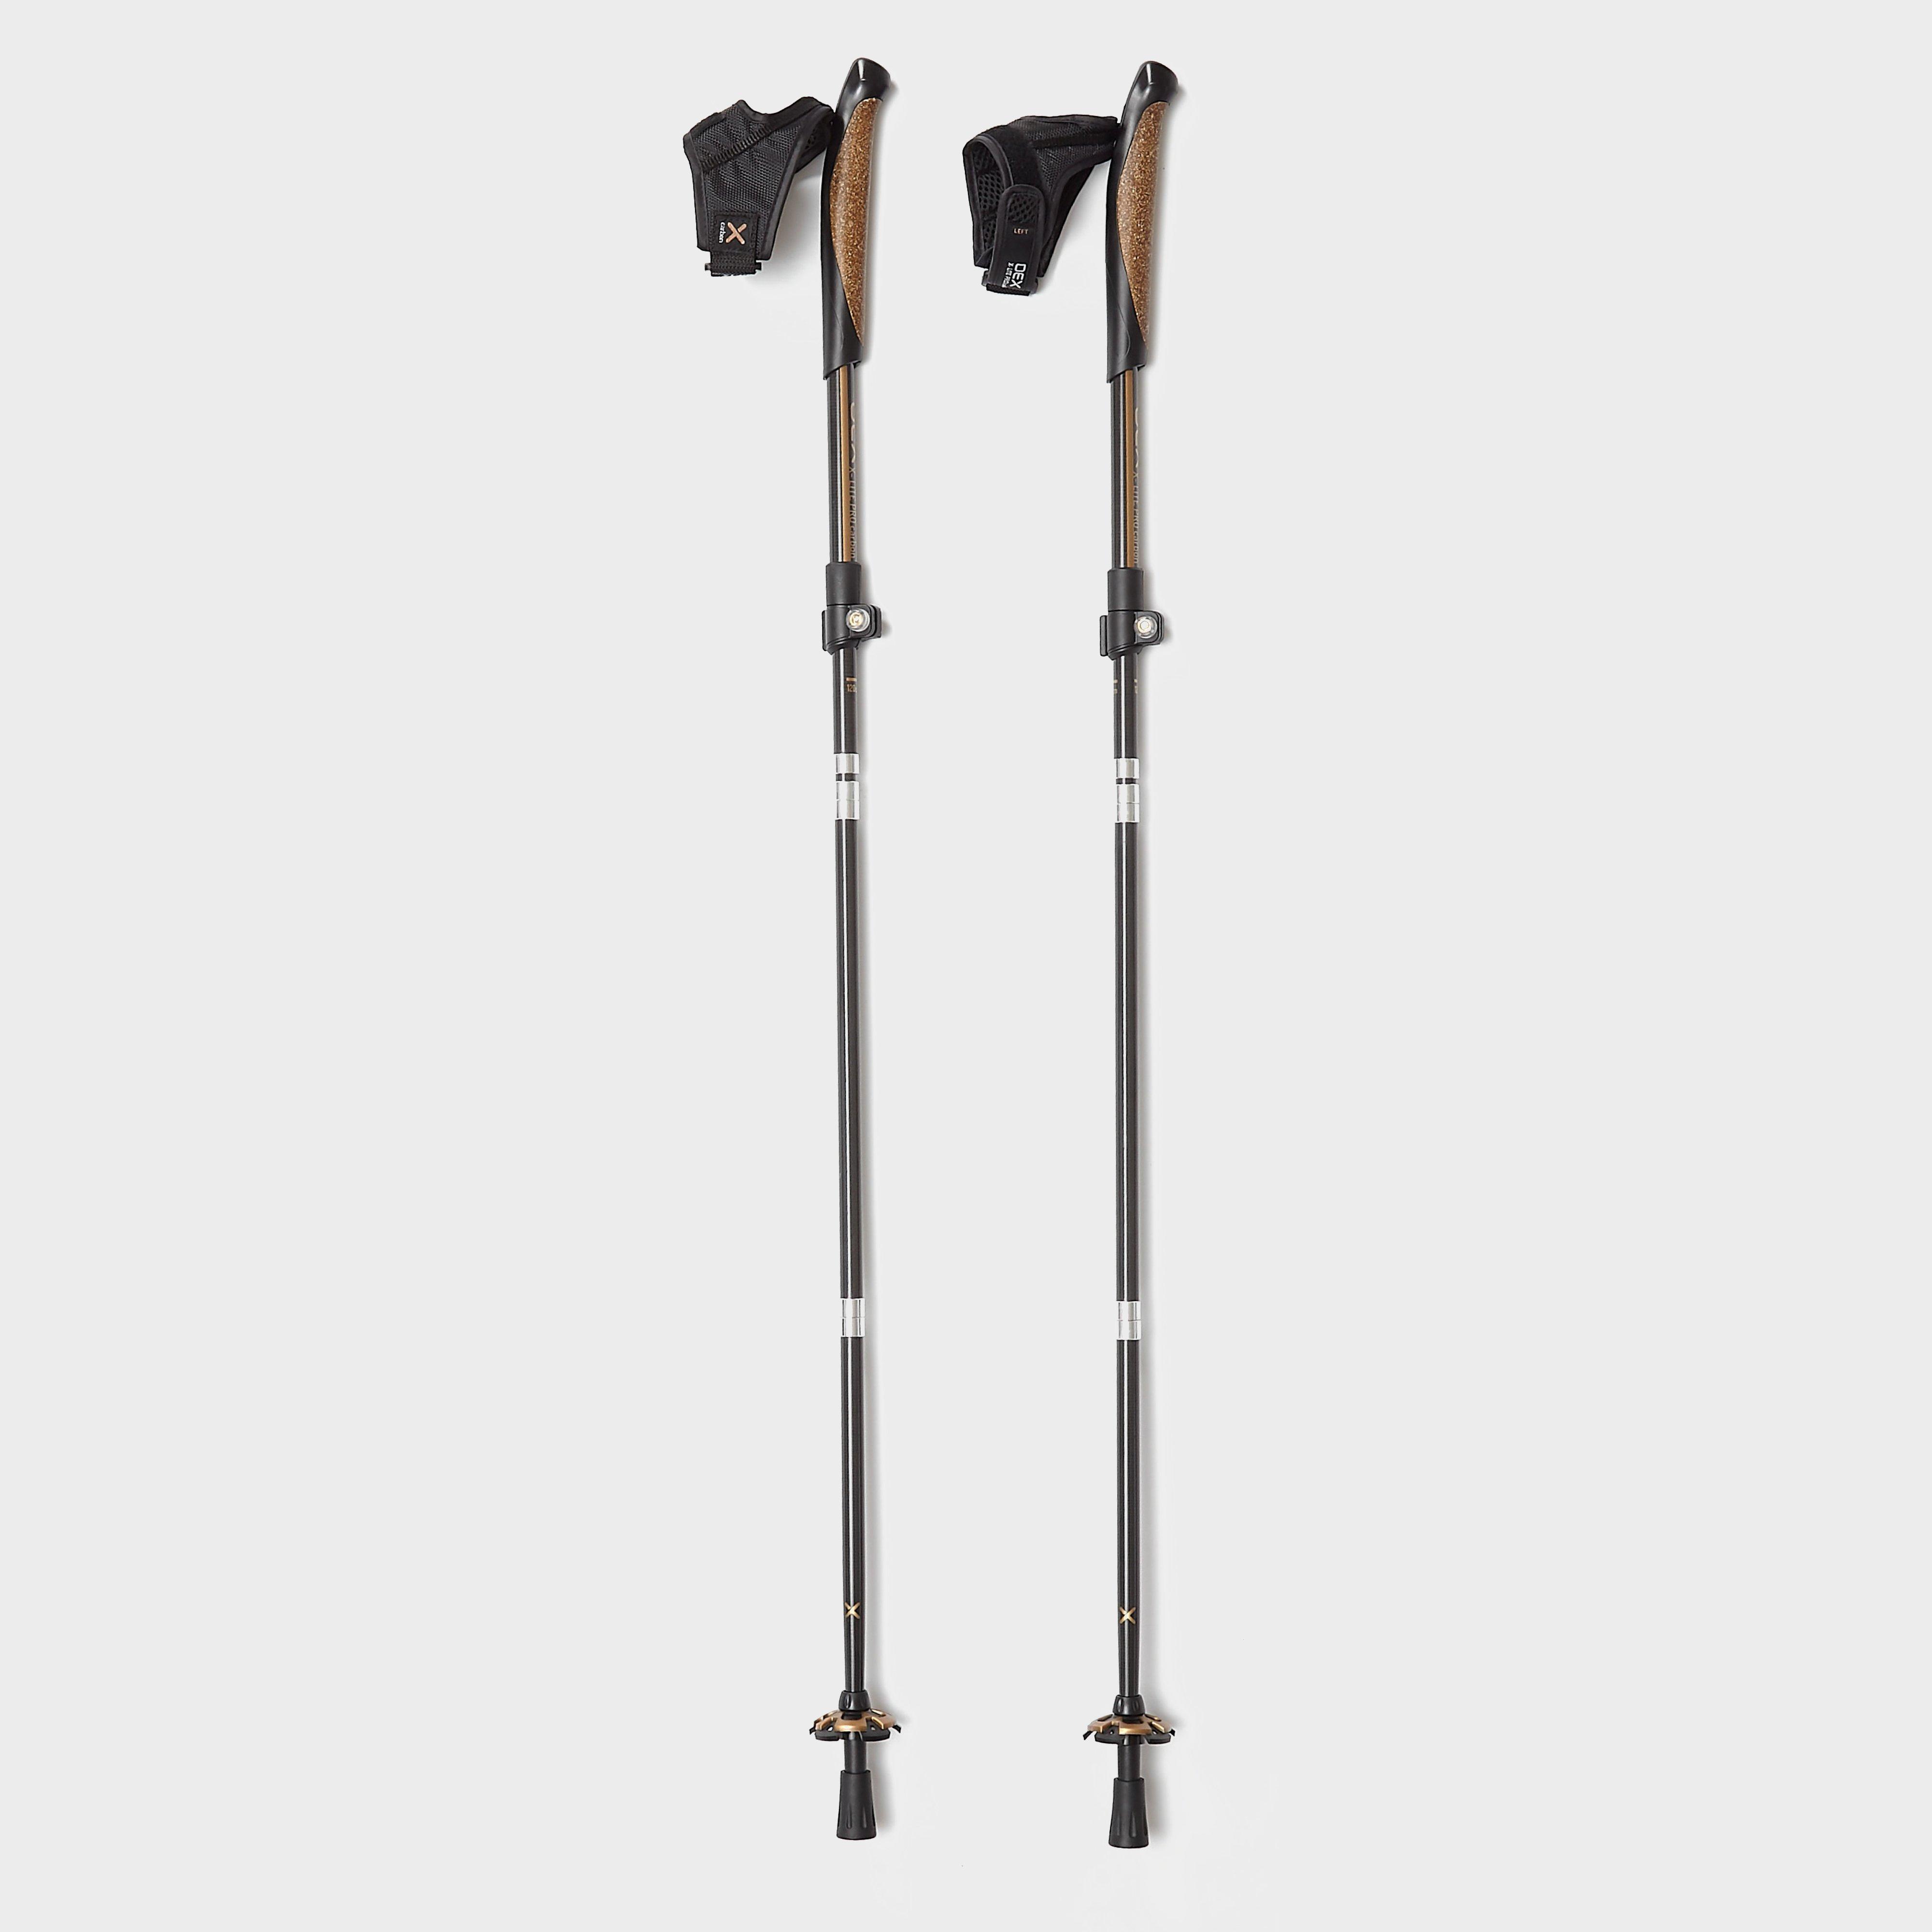 OEX Oex X-Lite Pro Carbon Walking Poles (Pair) - Black, Black